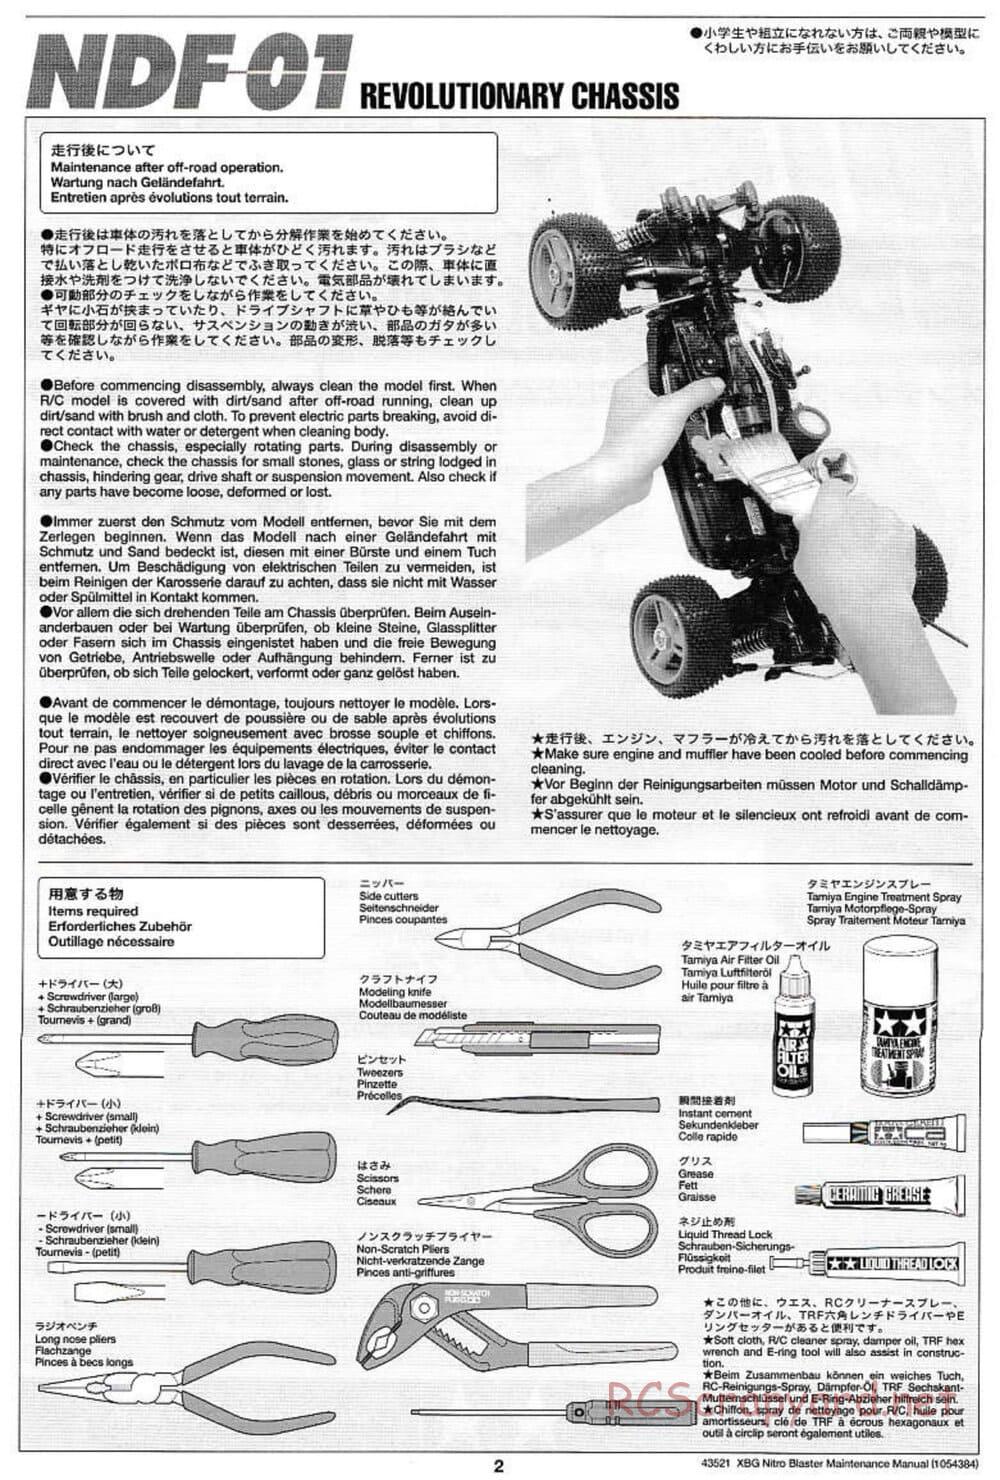 Tamiya - Nitro Blaster - NDF-01 - Maintenance Manual - Page 2